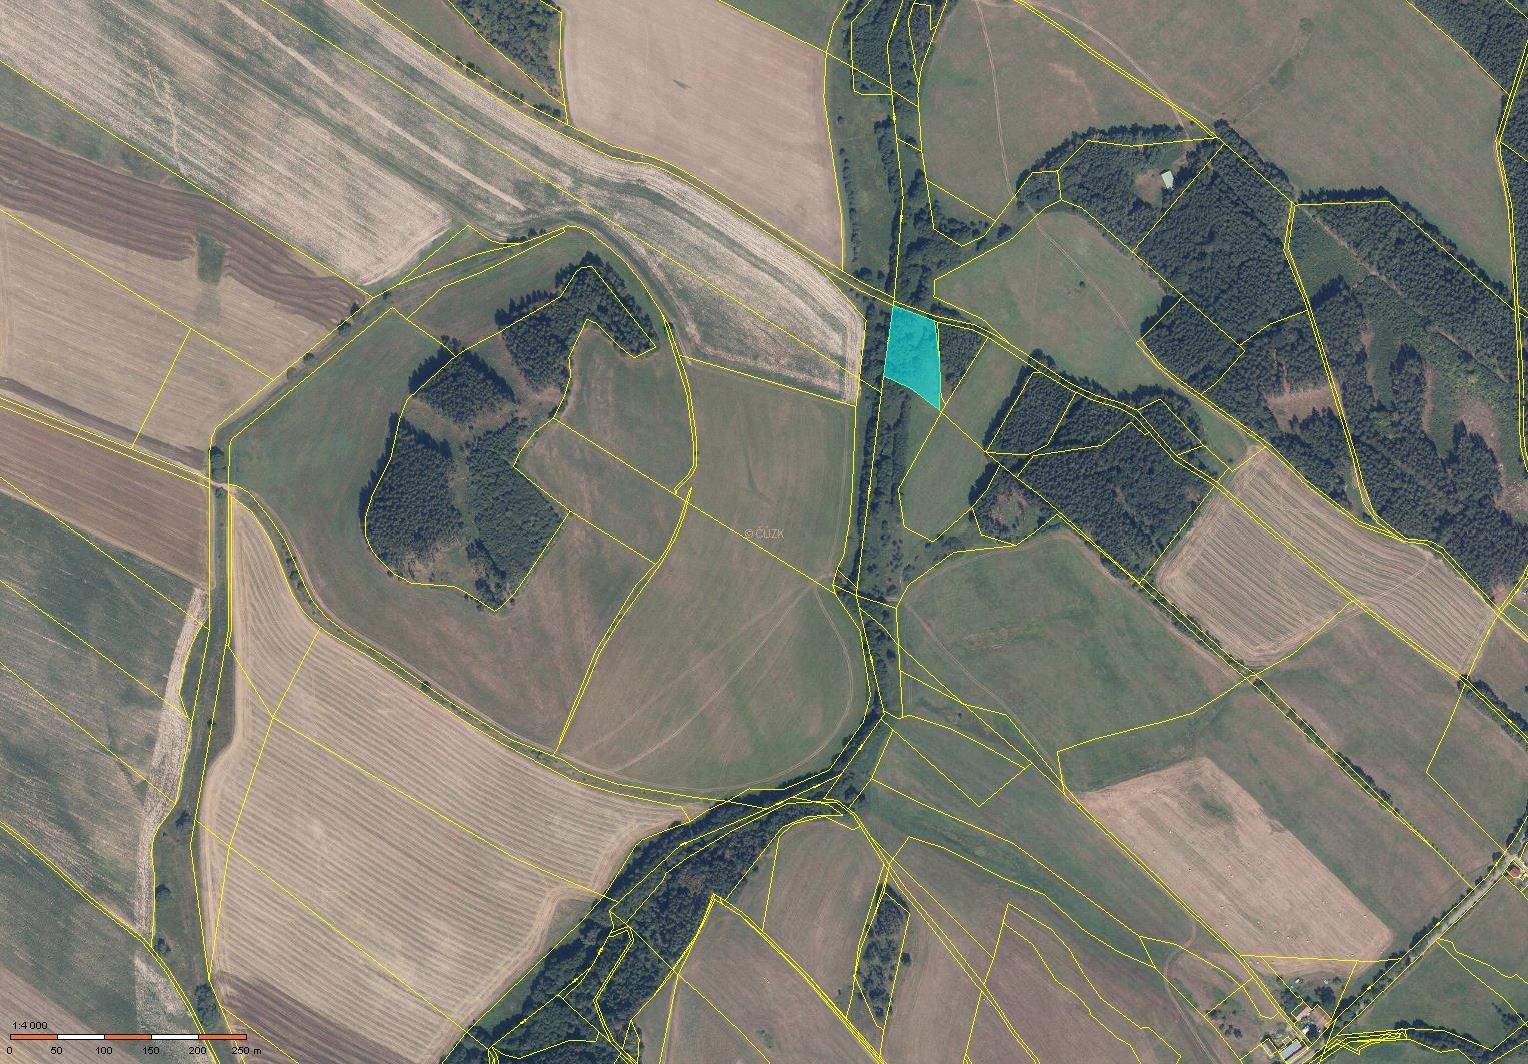 Prodej 0,452 ha půdy v k.ú. Benešov u Broumova, obrázek č. 2